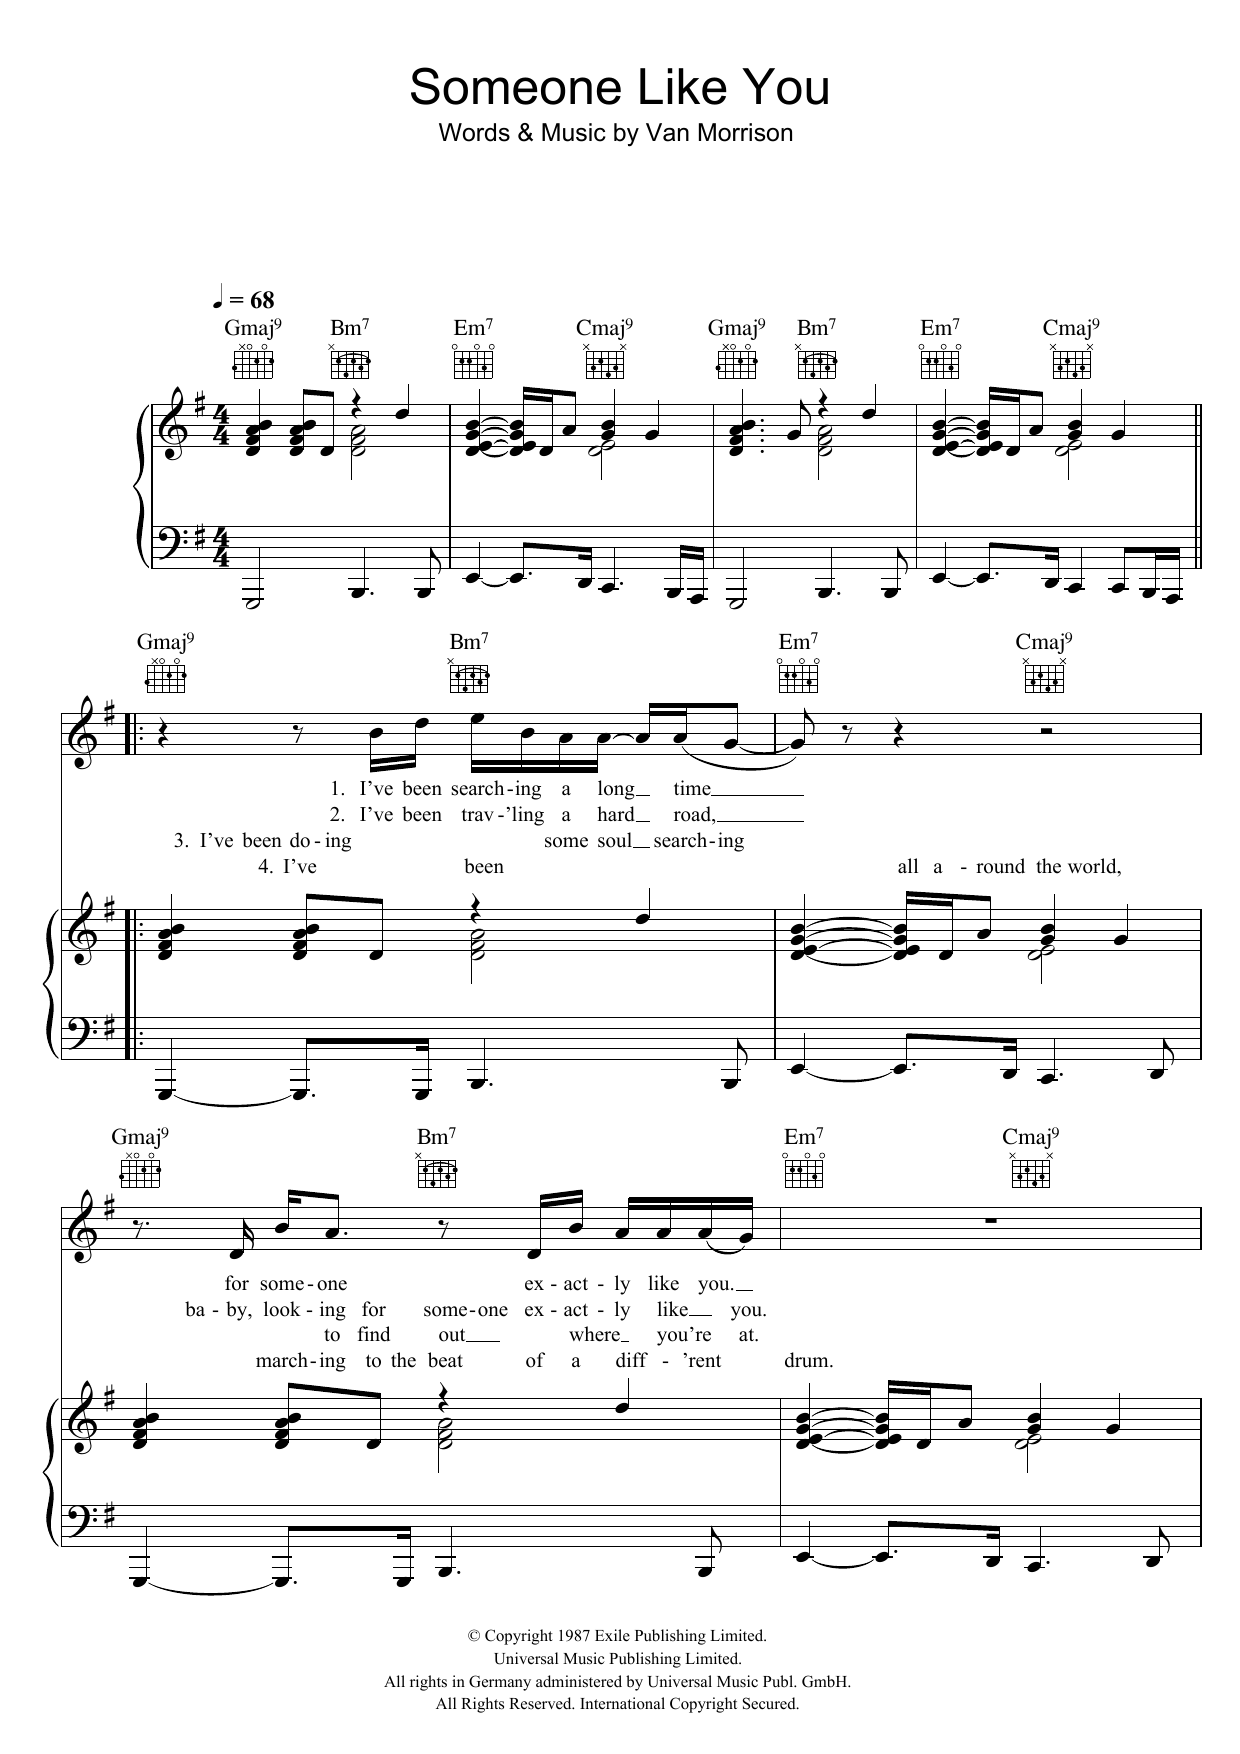 Van Morrison Someone Like You Sheet Music Notes & Chords for Guitar Tab - Download or Print PDF